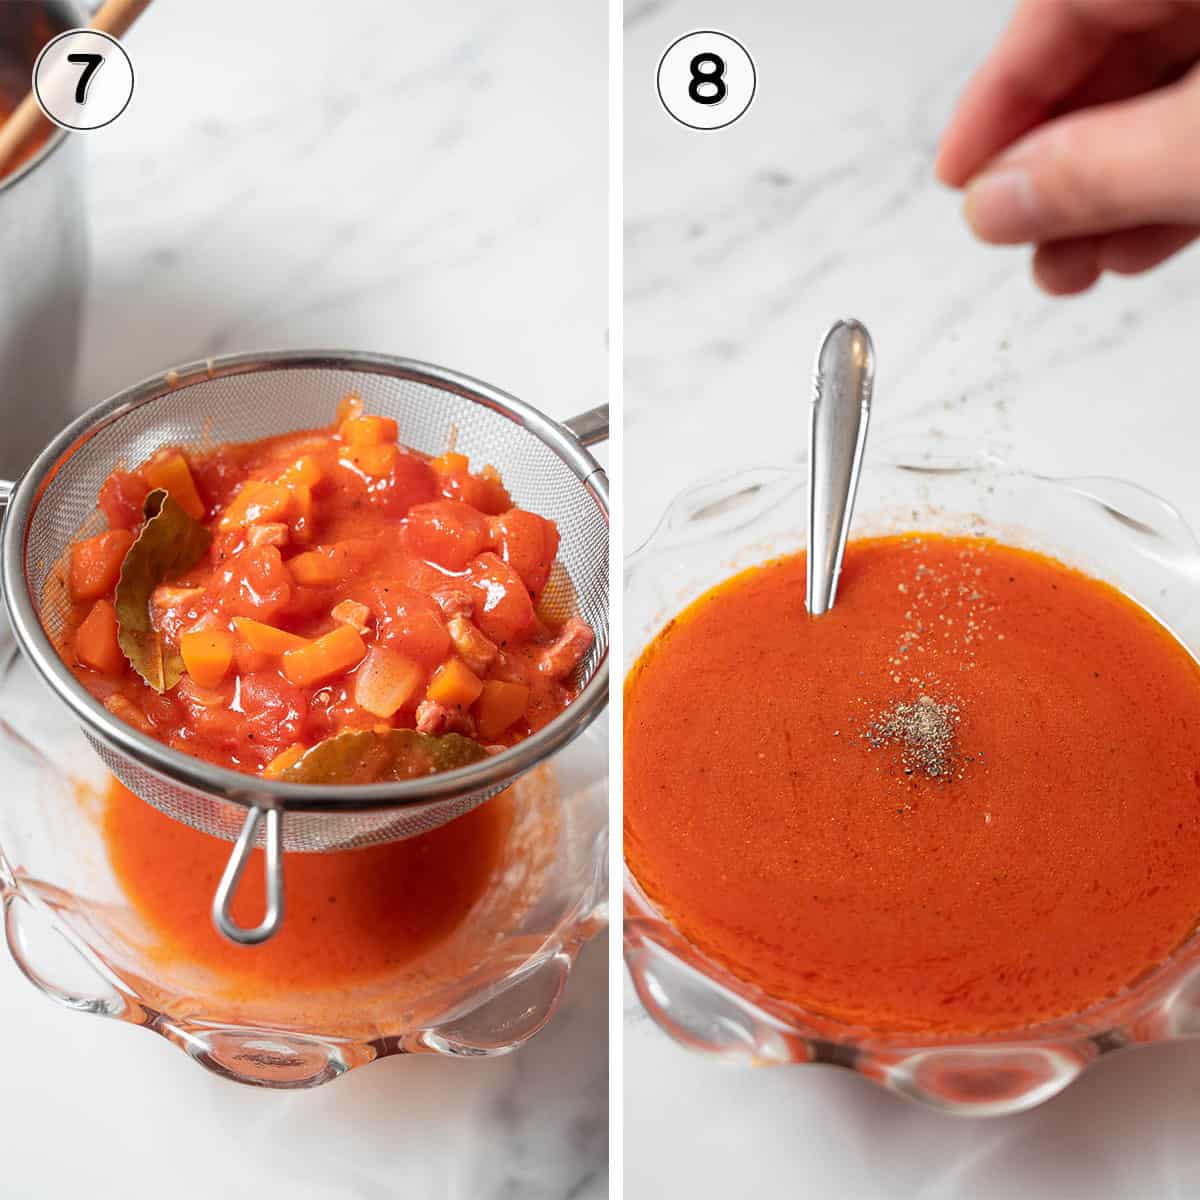 straining the tomato sauce and seasoning it.